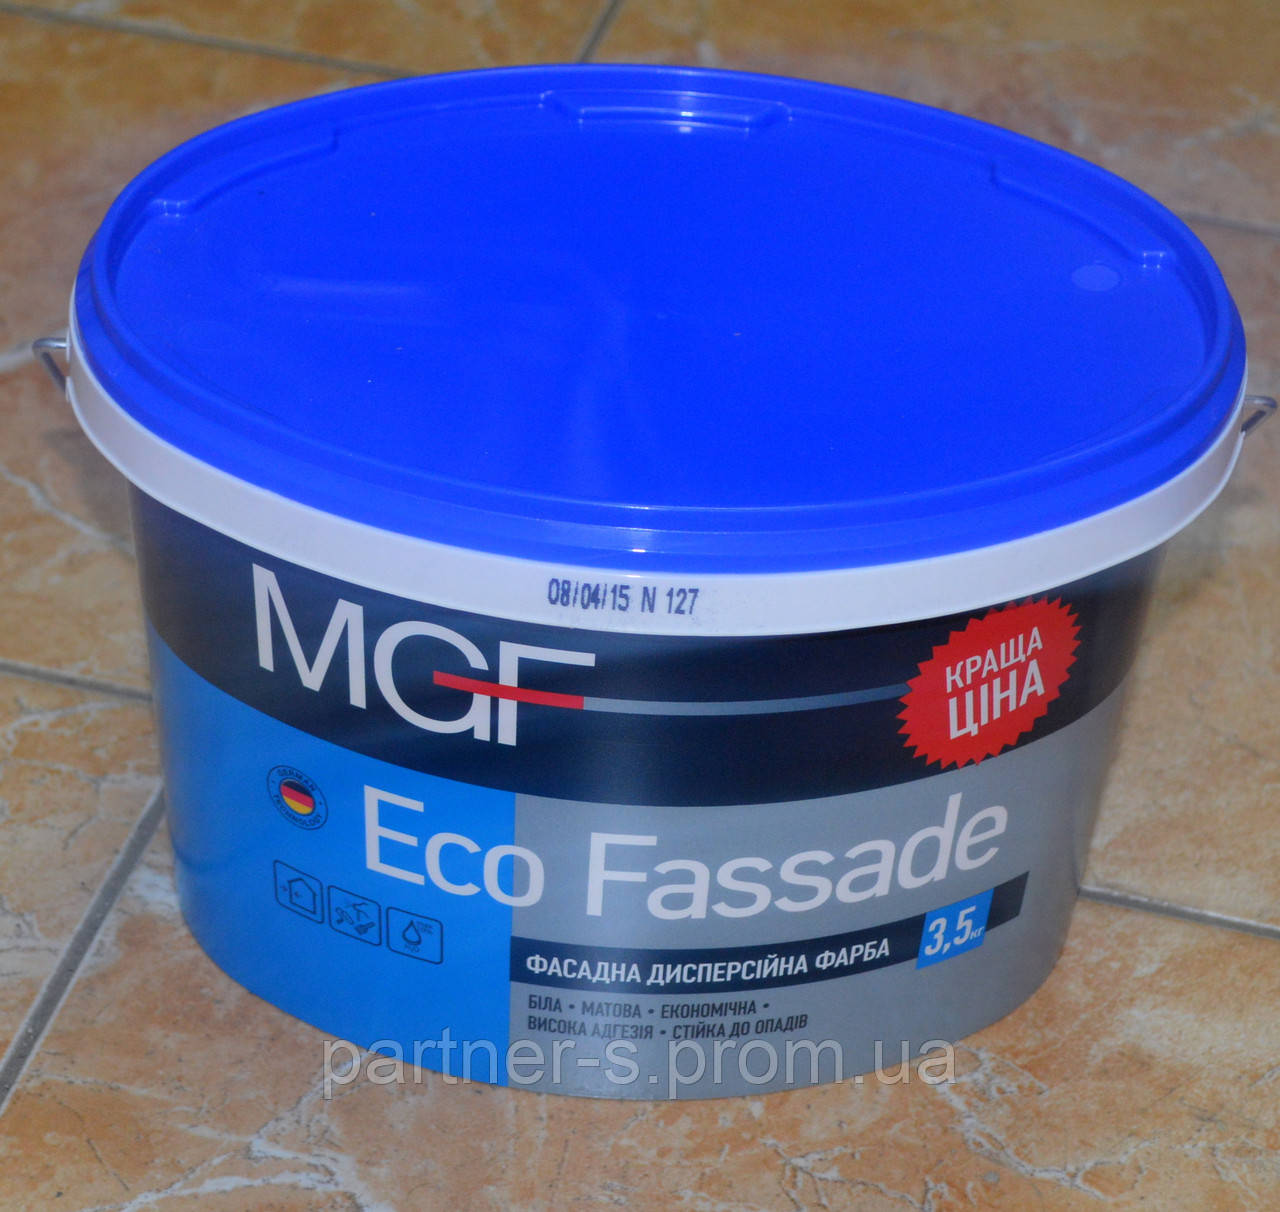 Фасадна дисперсійна фарба для зовнішніх і внутрішніх робіт М 690 EKO Fassade MGF (14 кг)